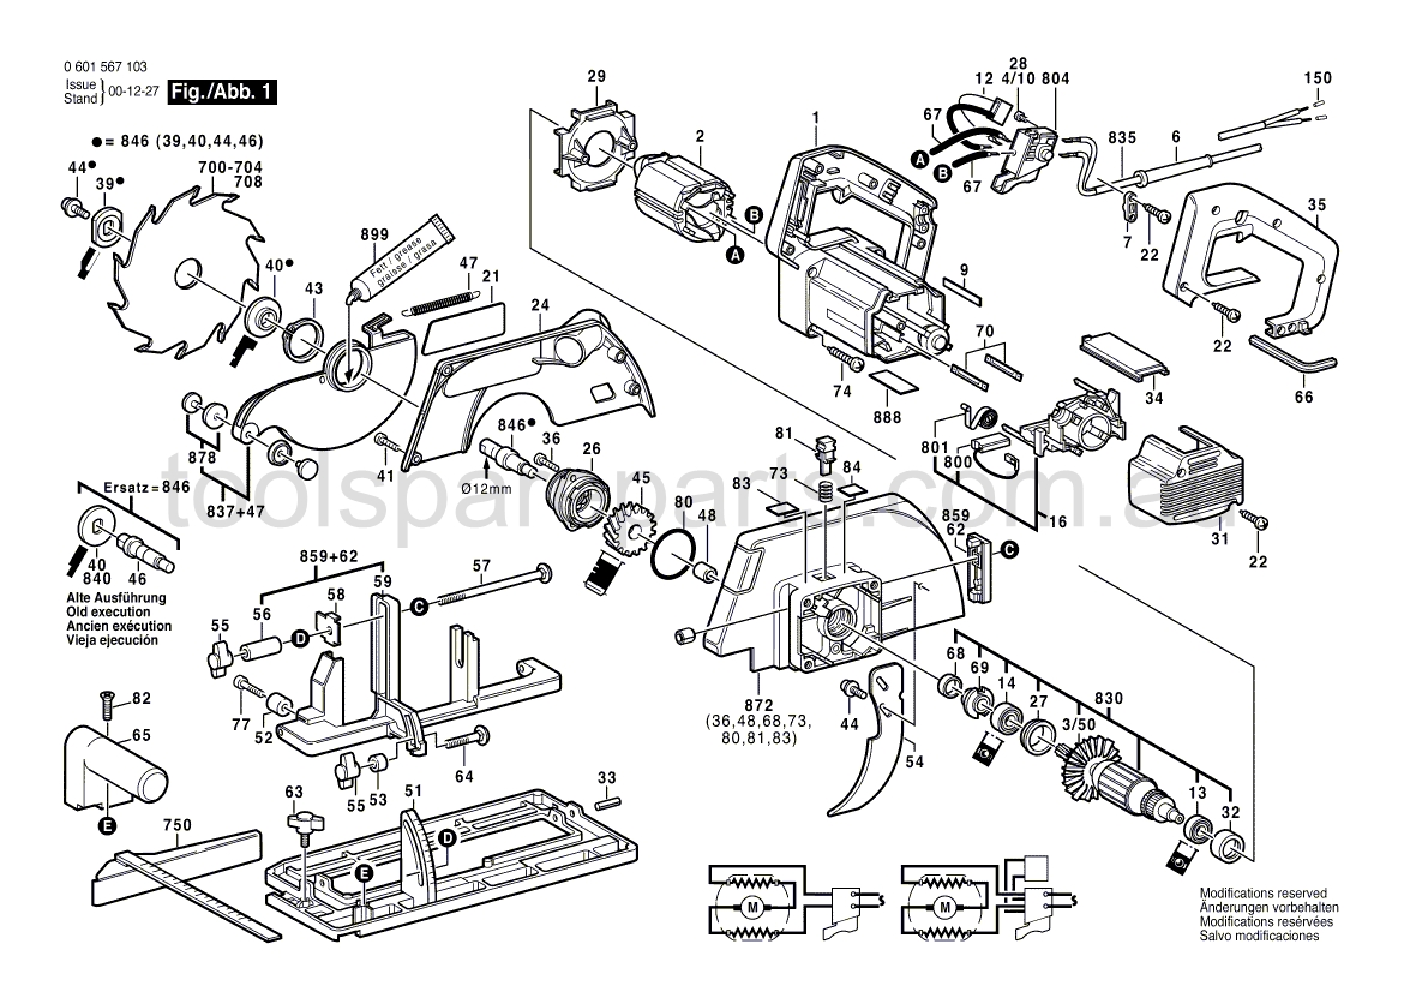 Bosch GKS 55 0601567137  Diagram 1